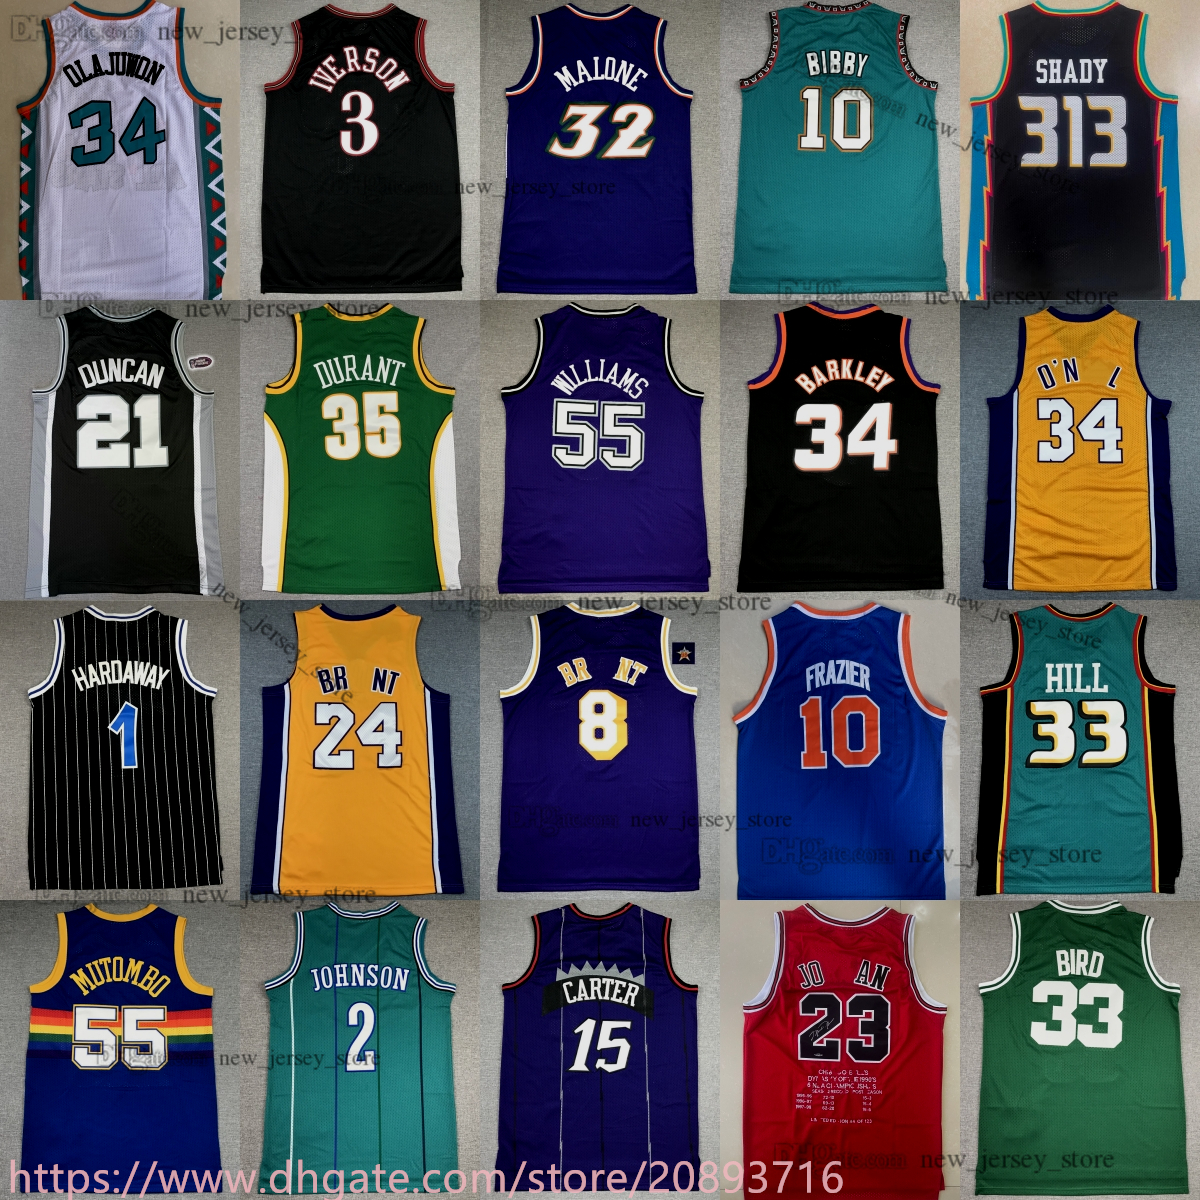 NBA Celtics Jersey : r/DHgate